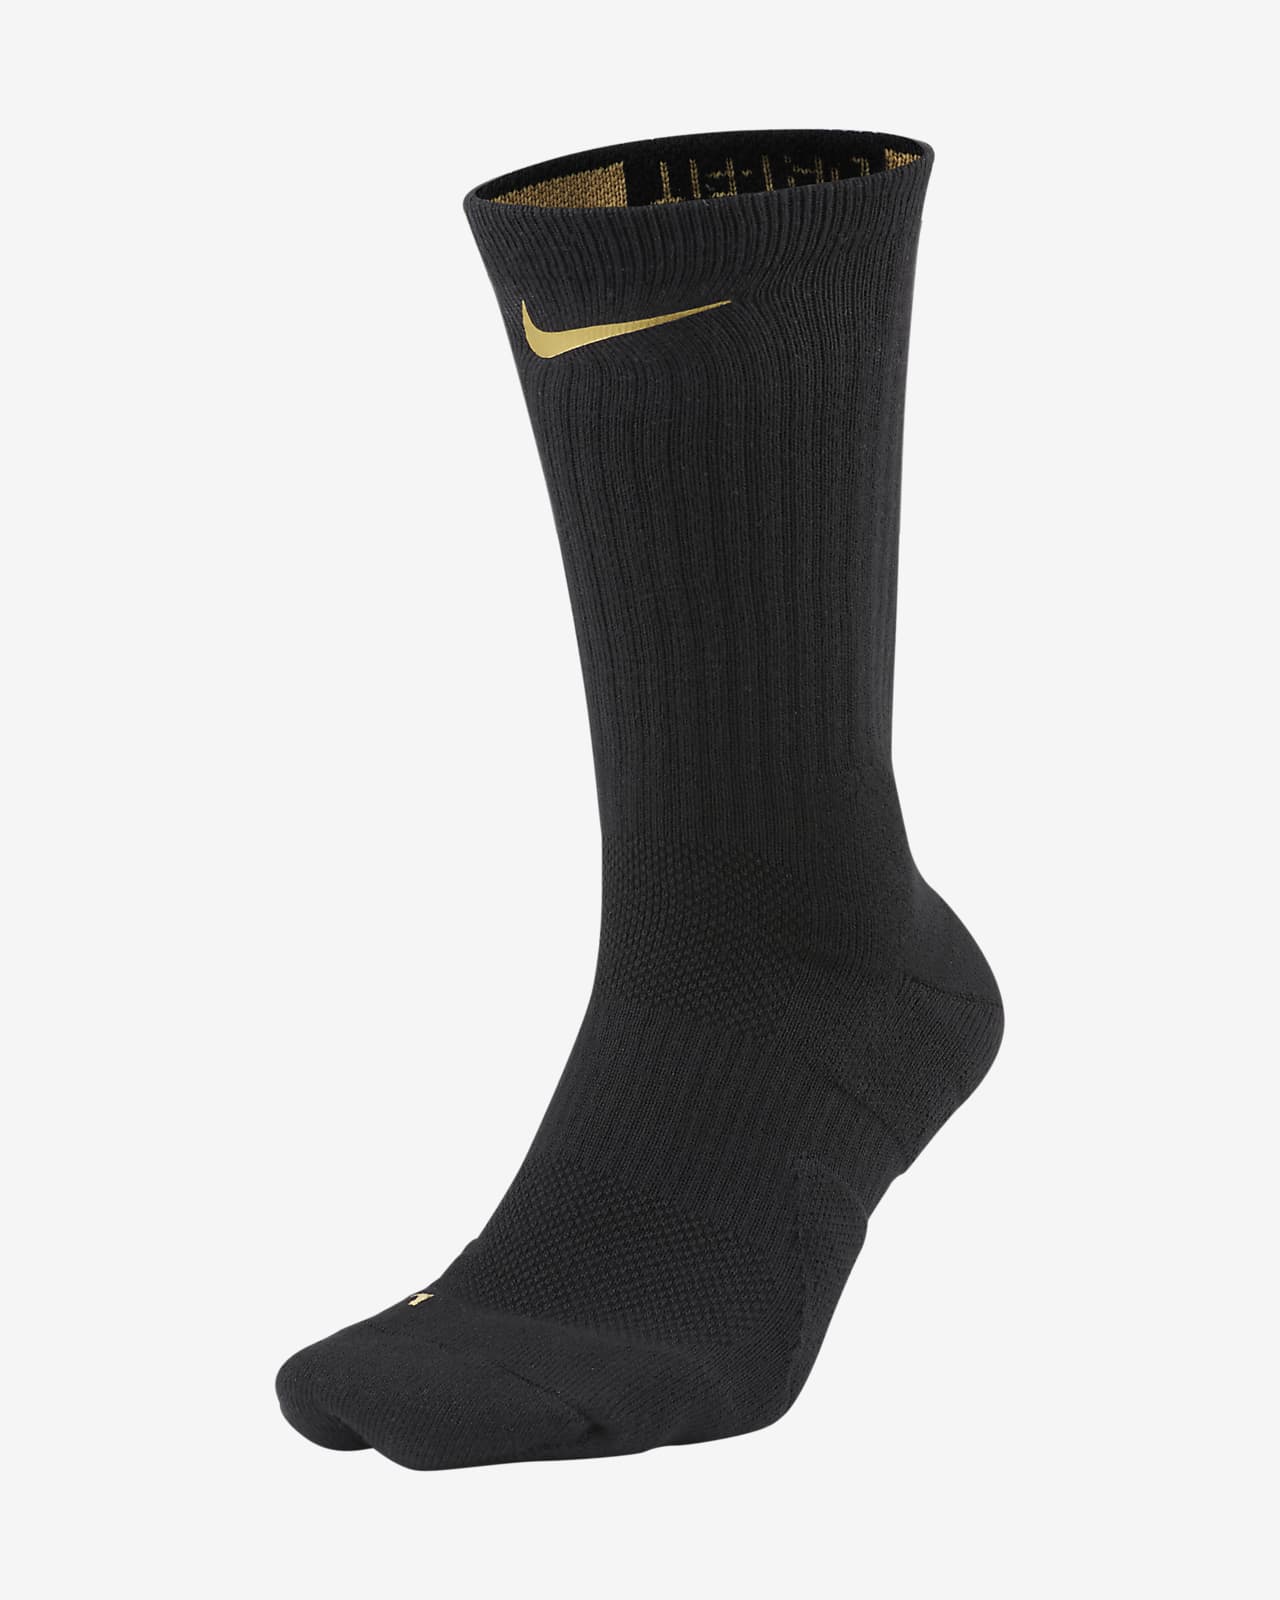 nike elite socks australia